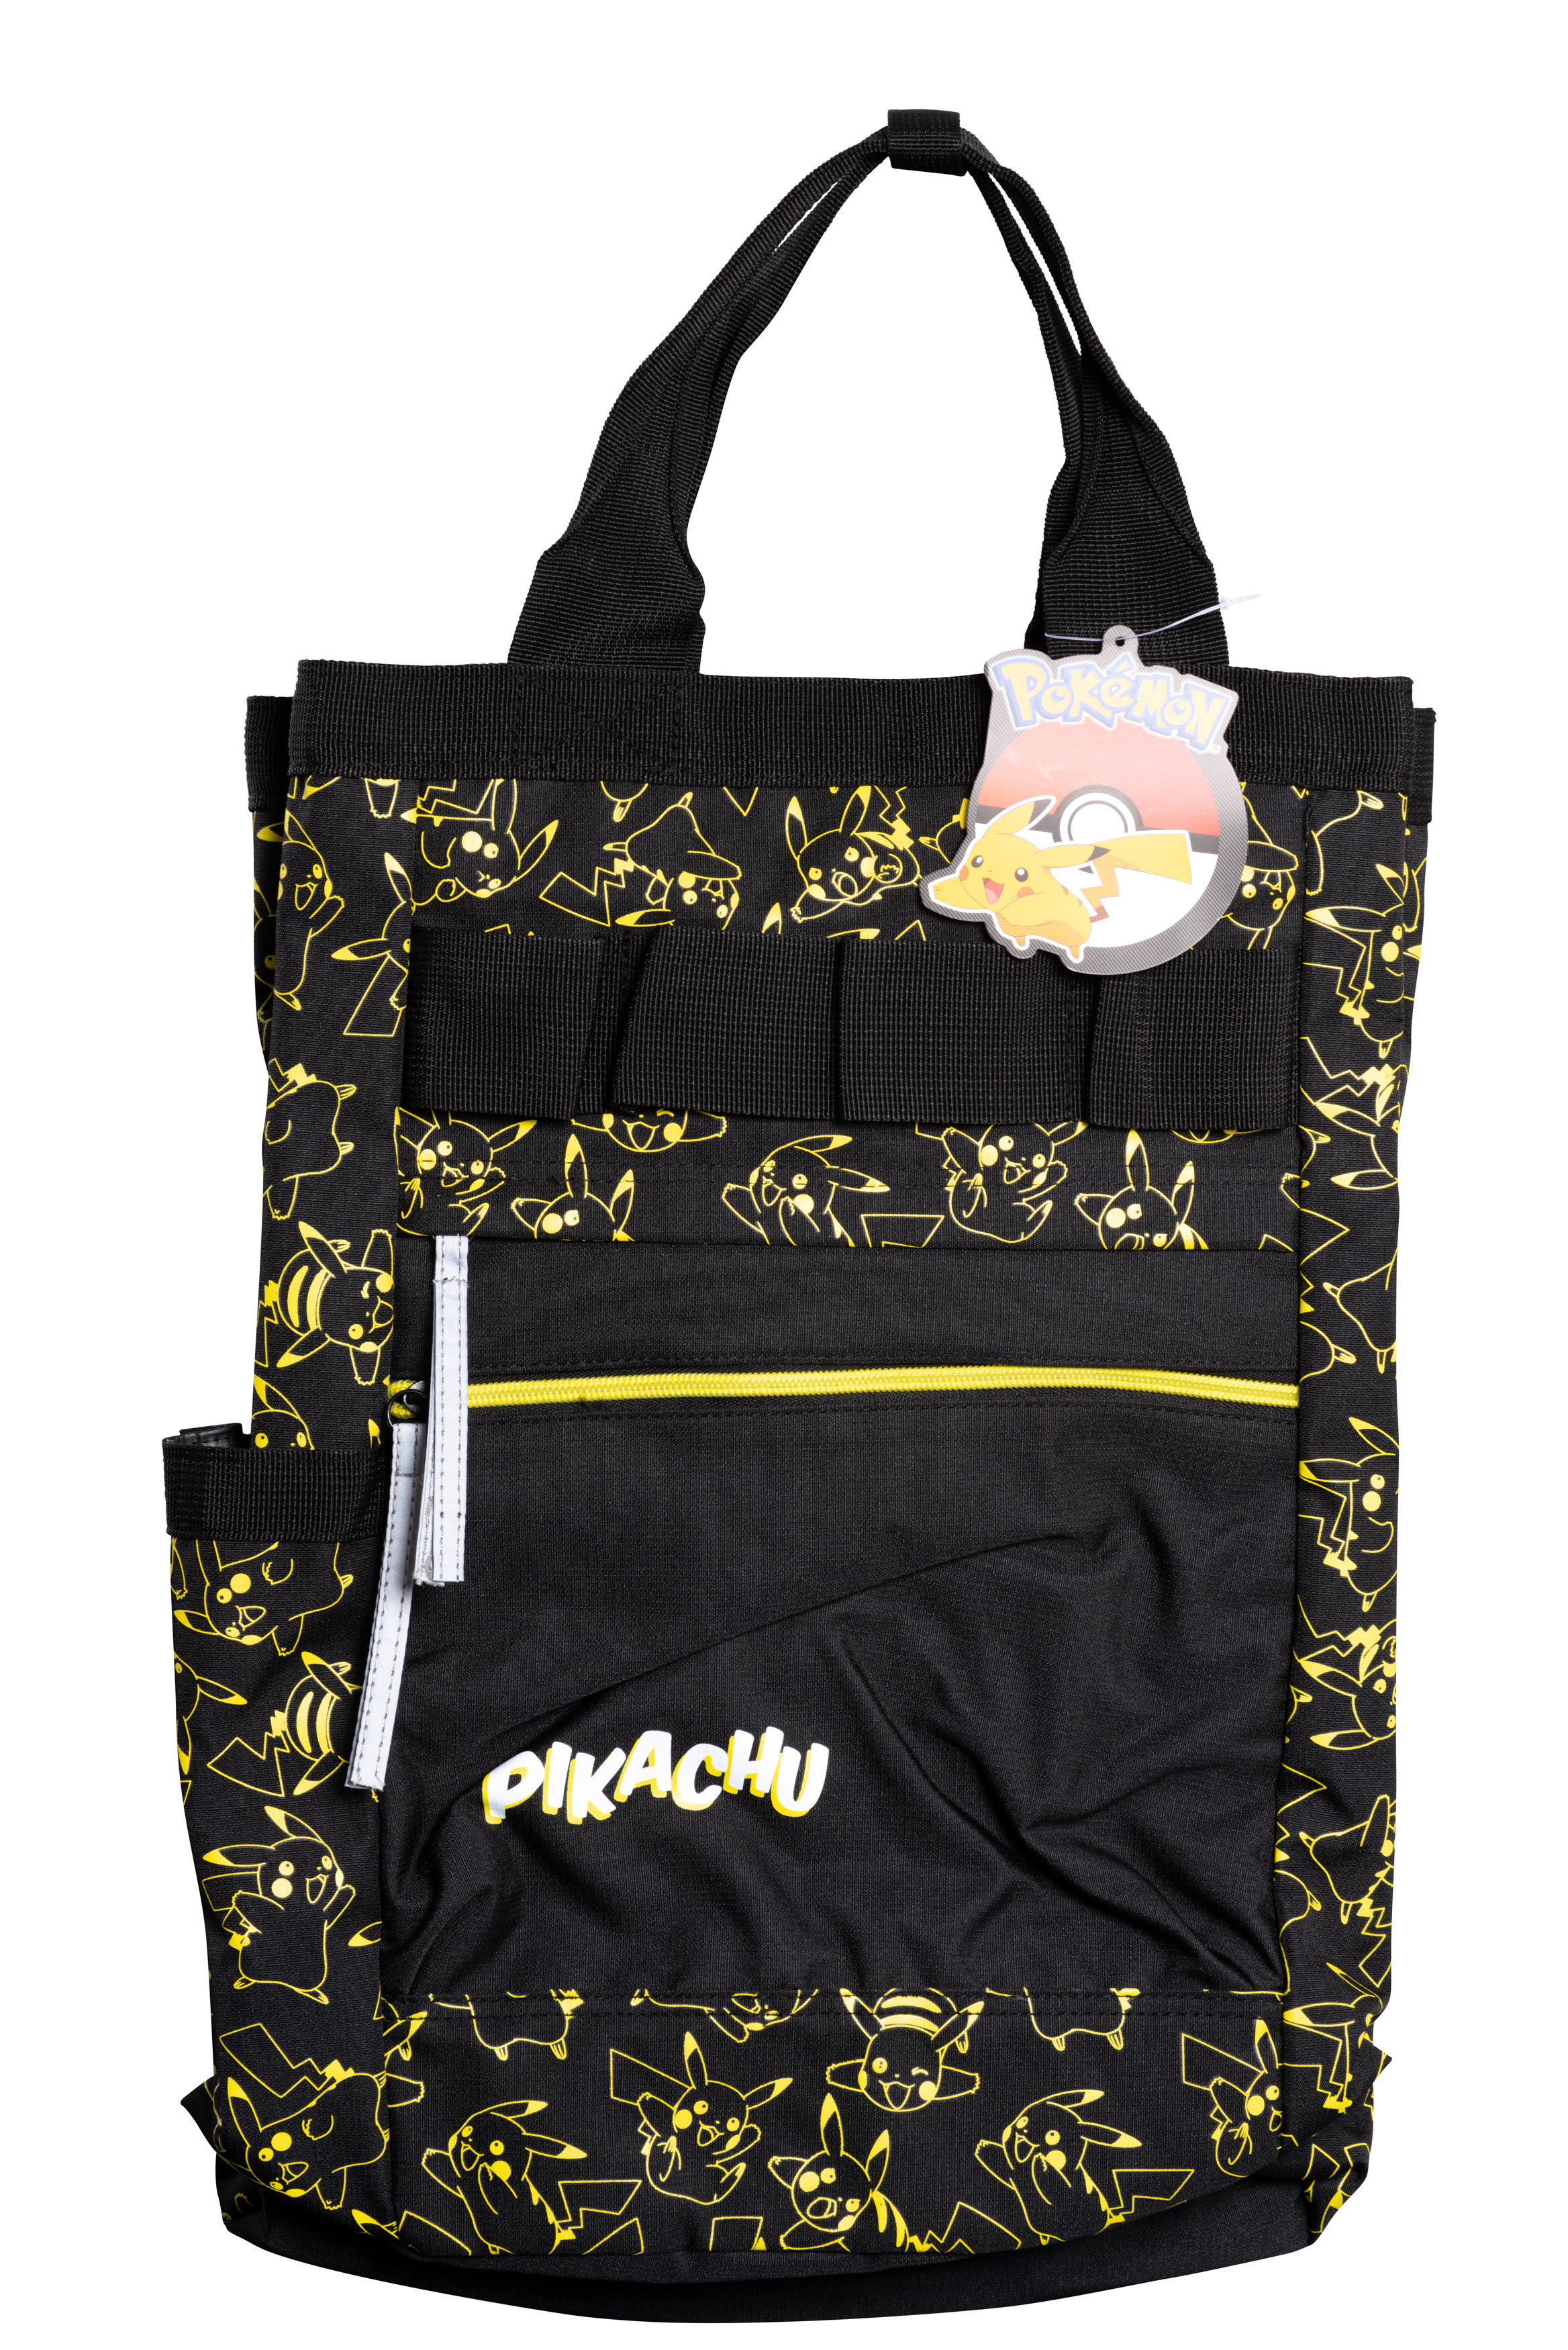 Pikachu schwarz - Pokémon Rucksack -